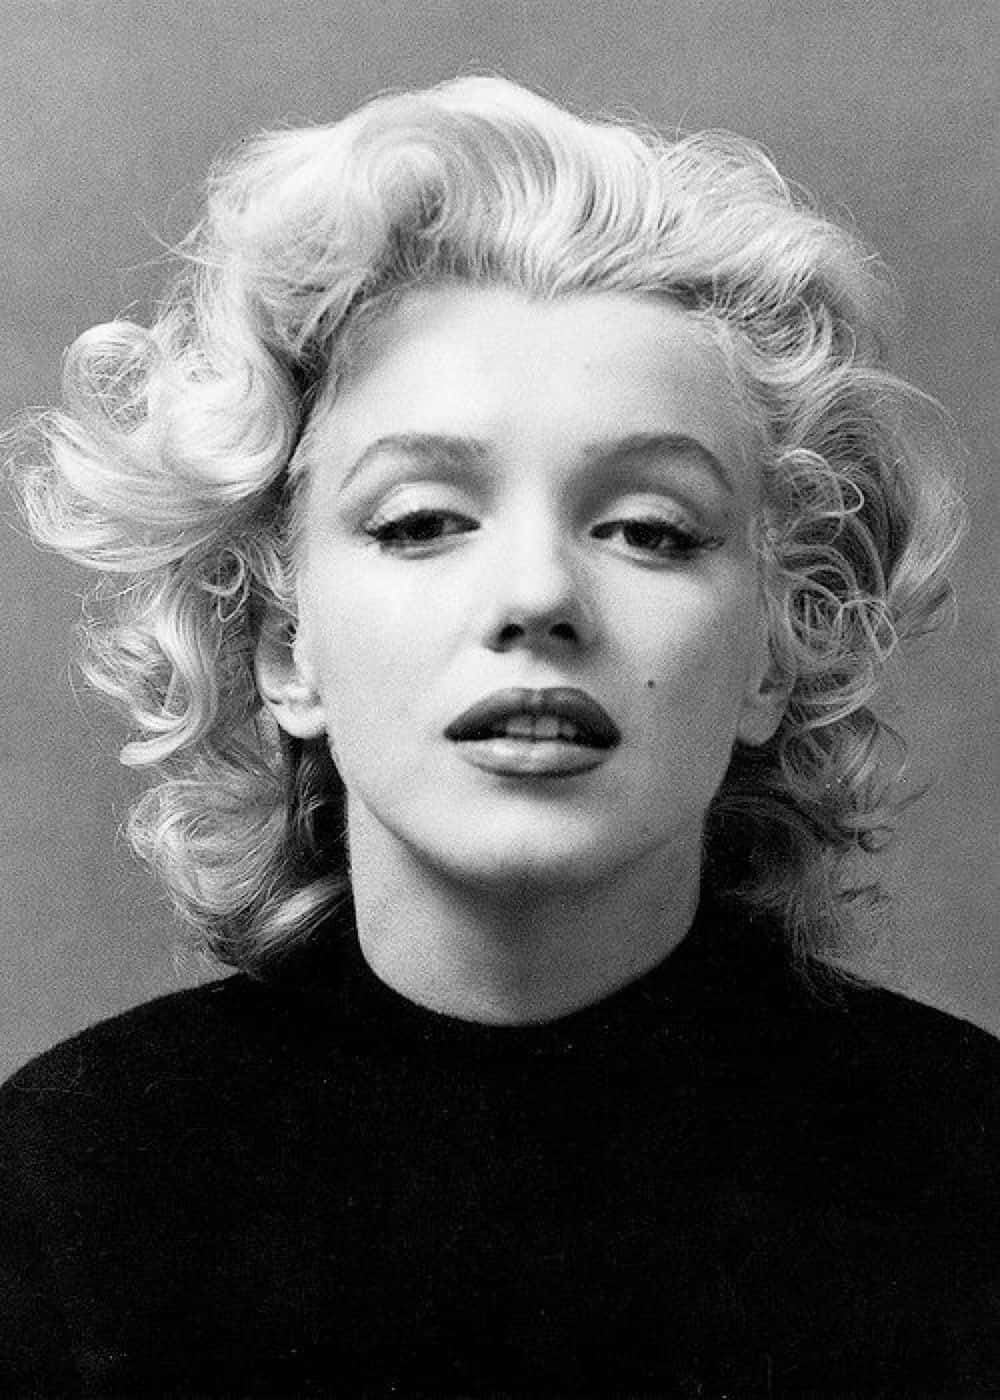 "Marilyn Monroe - The legendary Hollywood star"